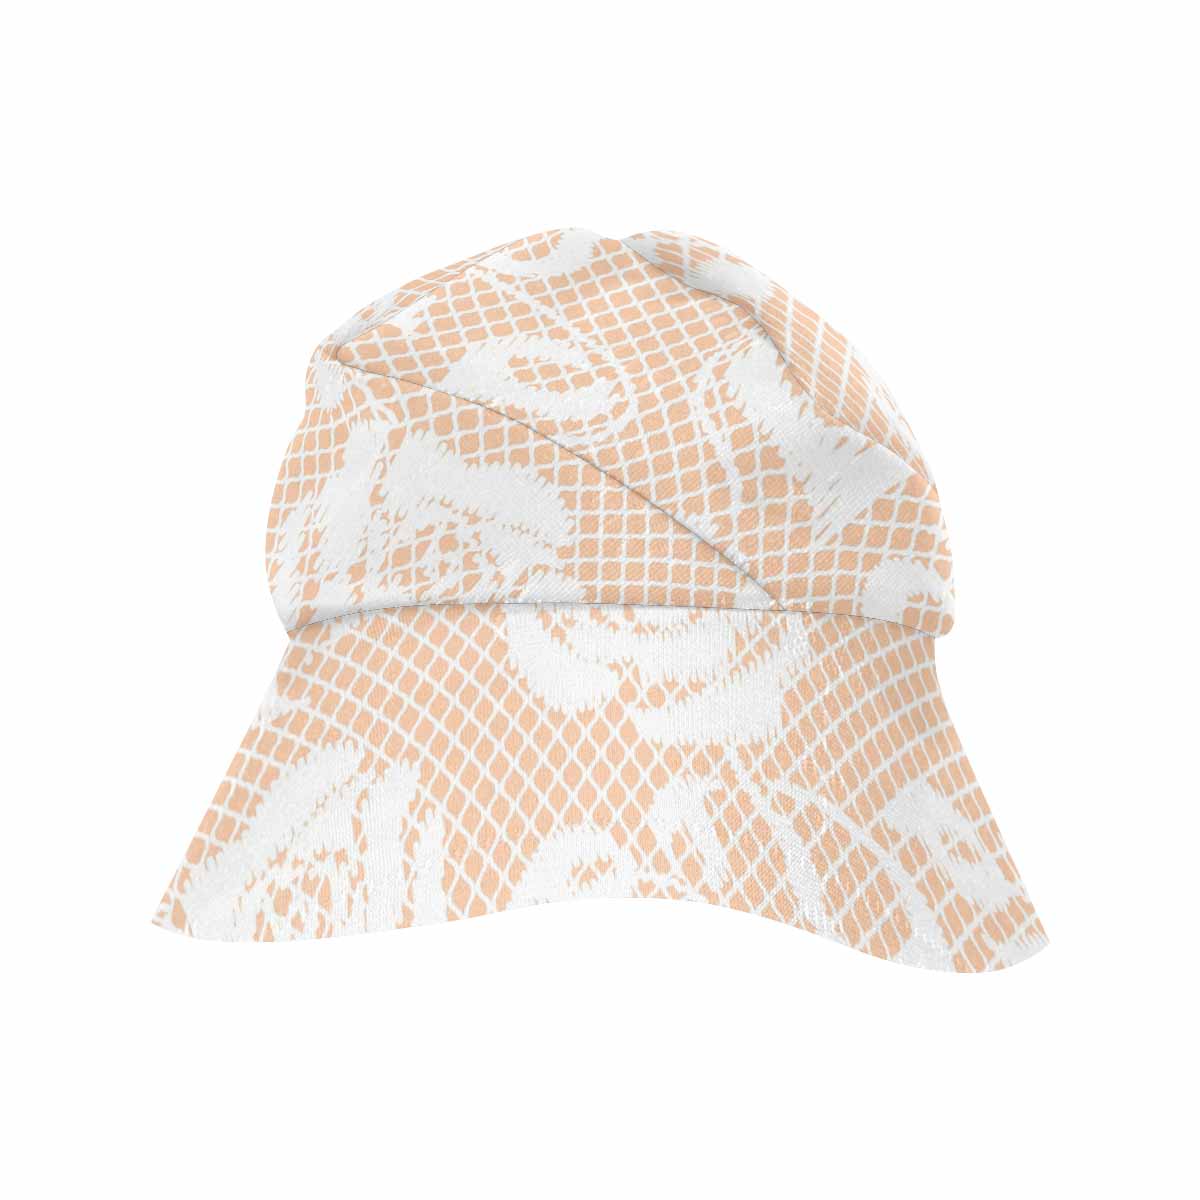 Victorian lace print, wide brim sunvisor Hat, outdoors hat, design 16